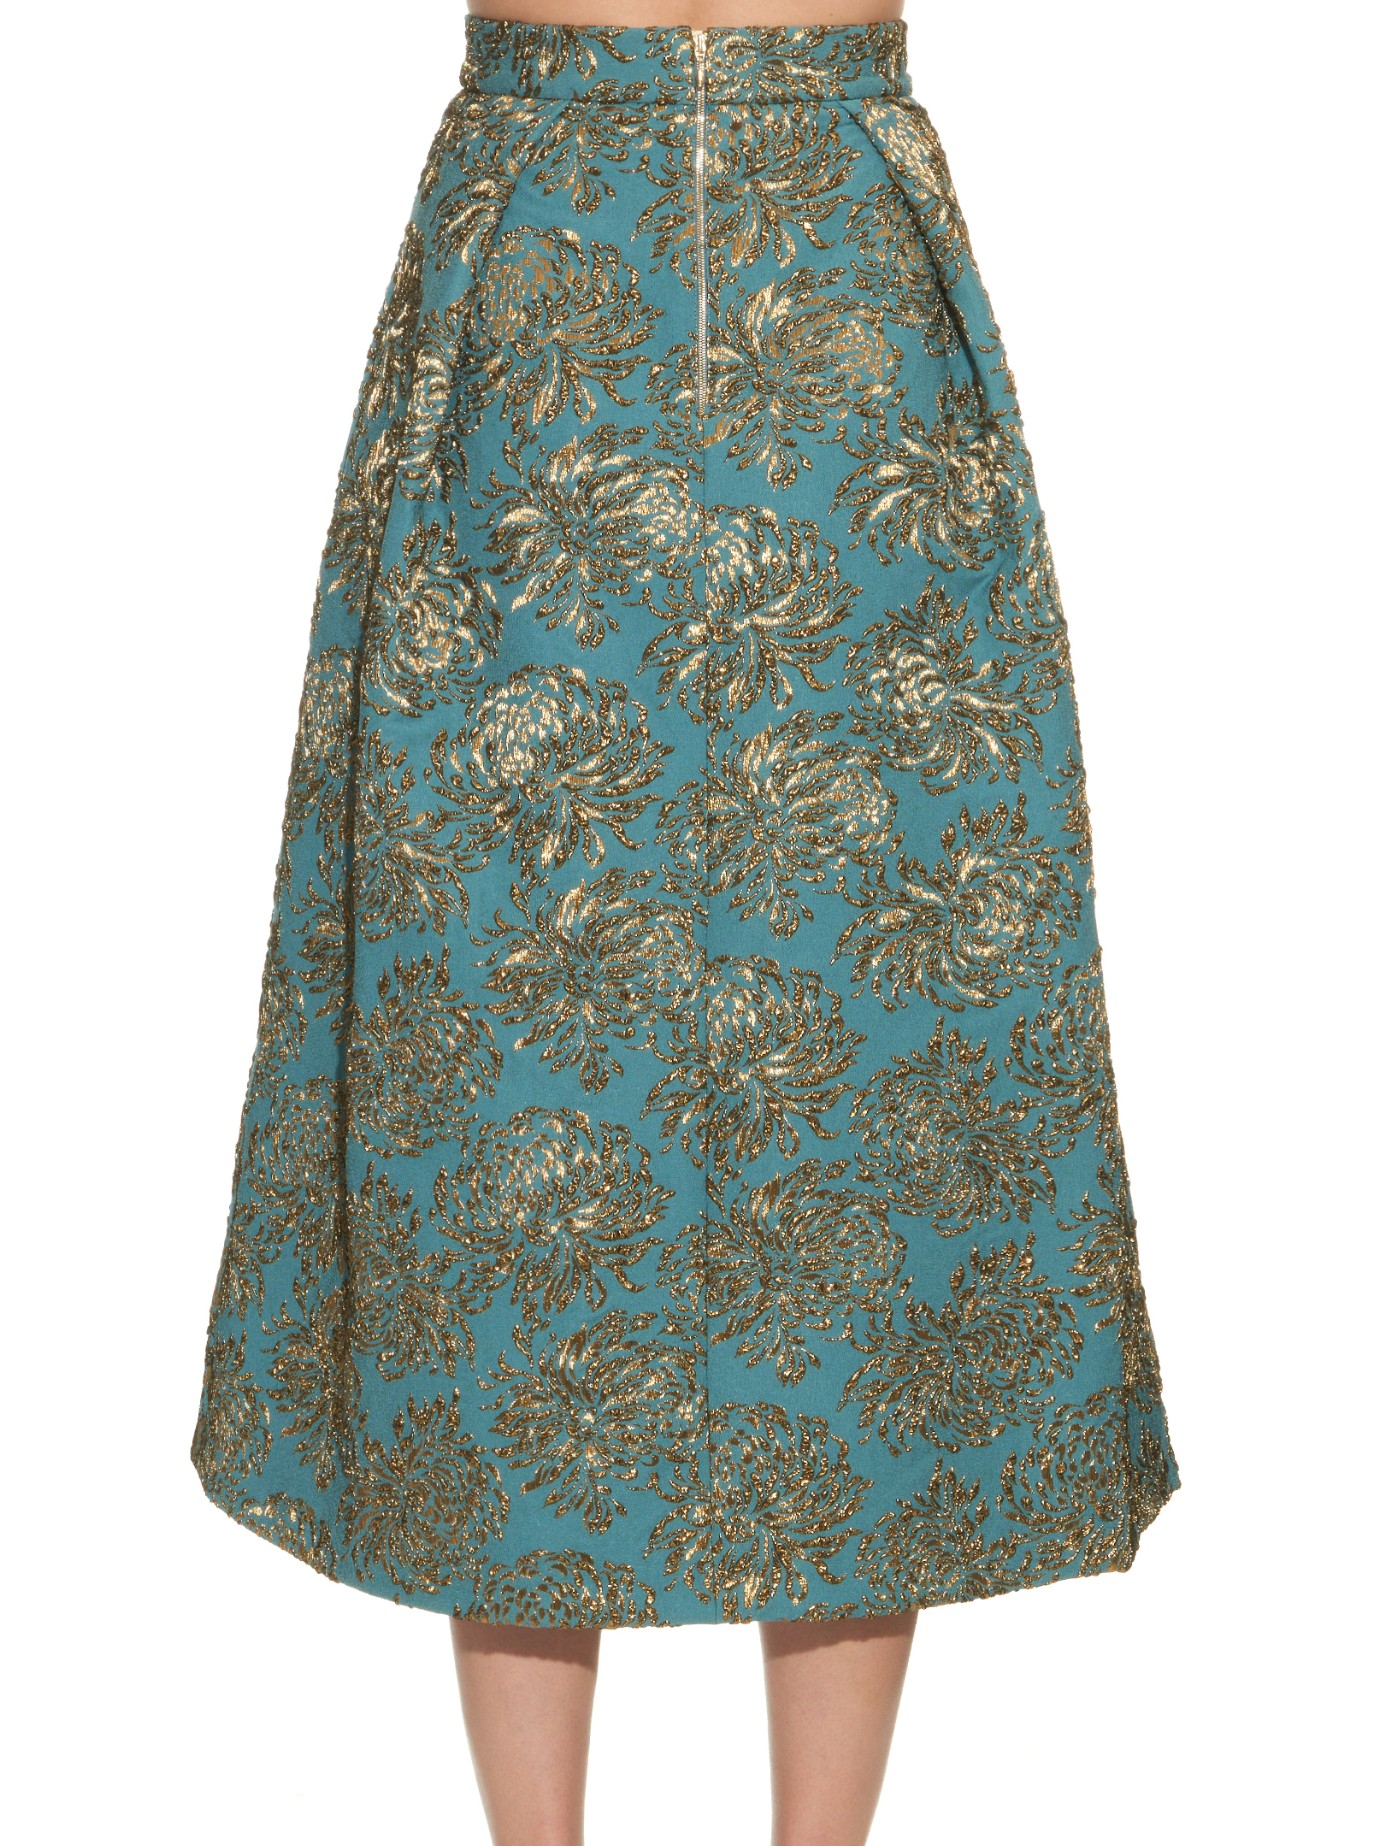 Rochas A-line Brocade Skirt in Blue | Lyst